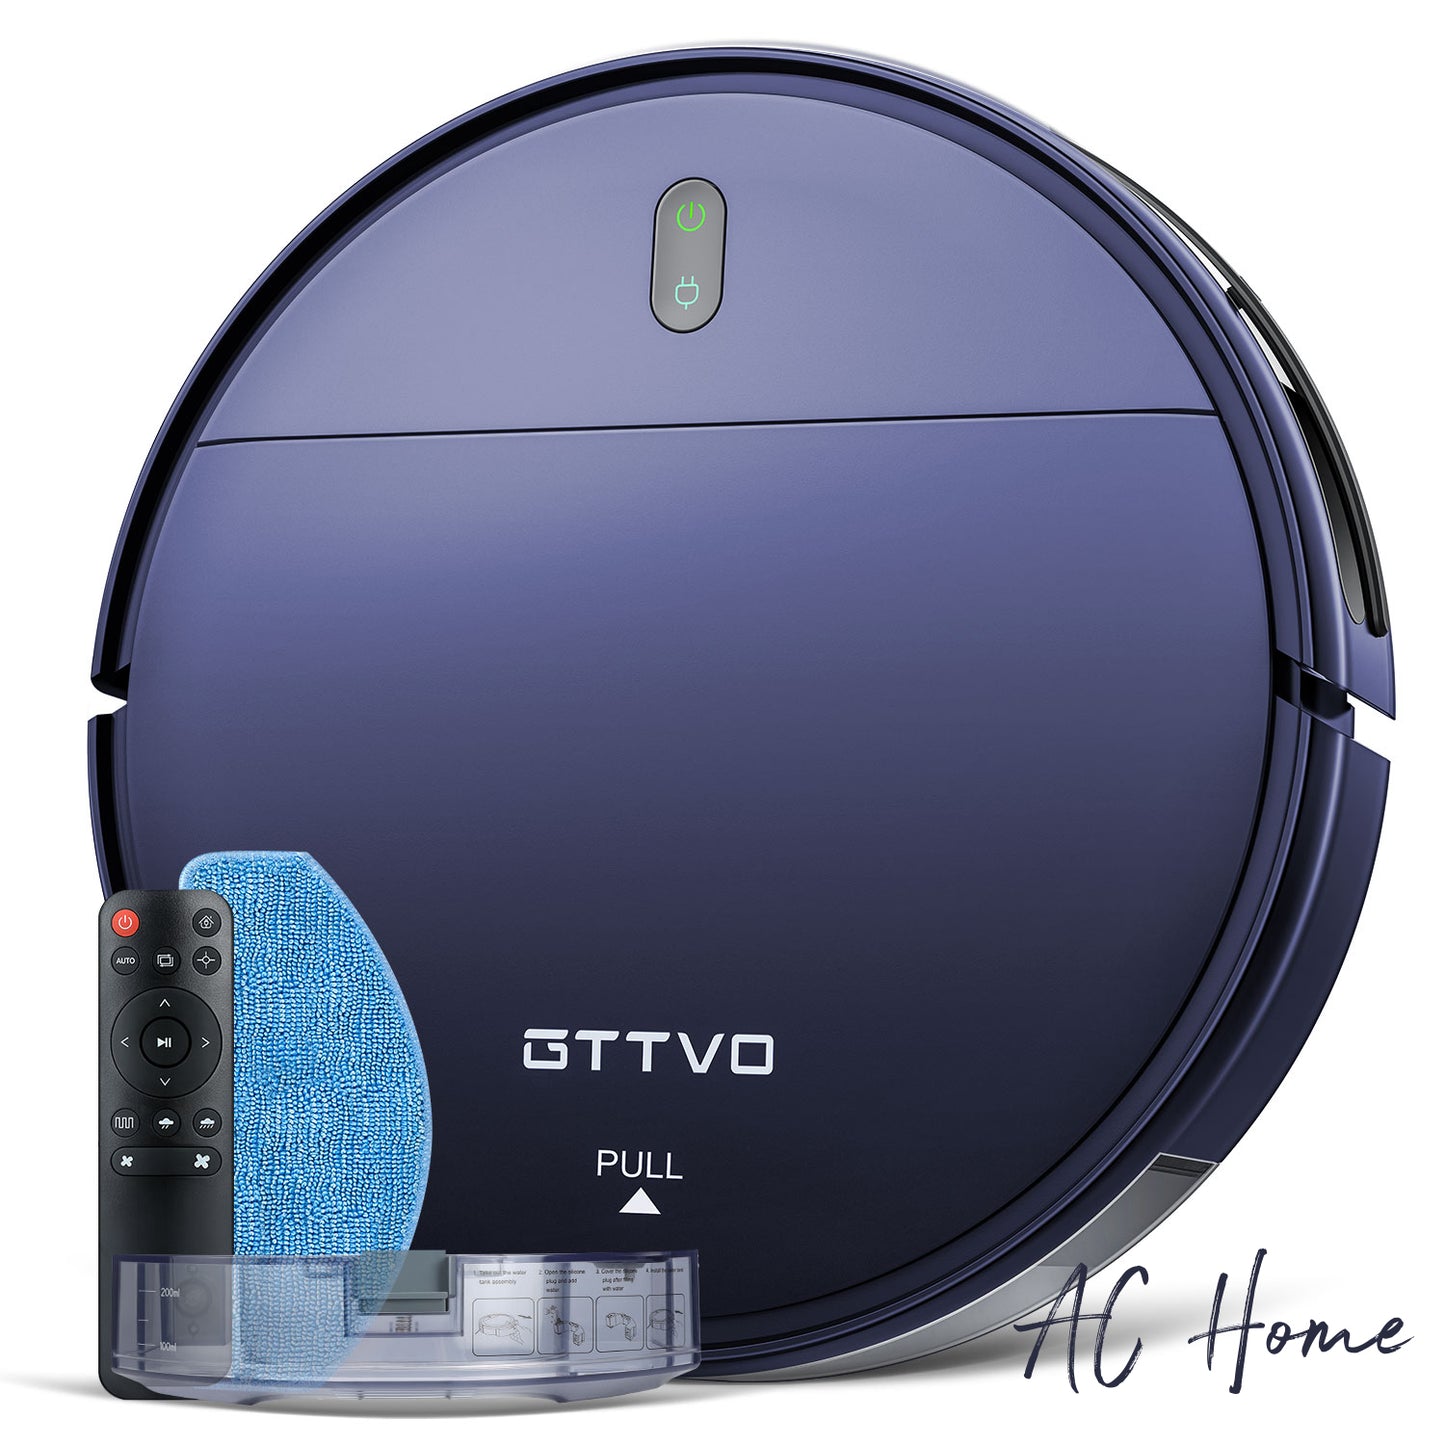 GTTVO Smart Floor Cleaning Robot  Vacuum Cleaner